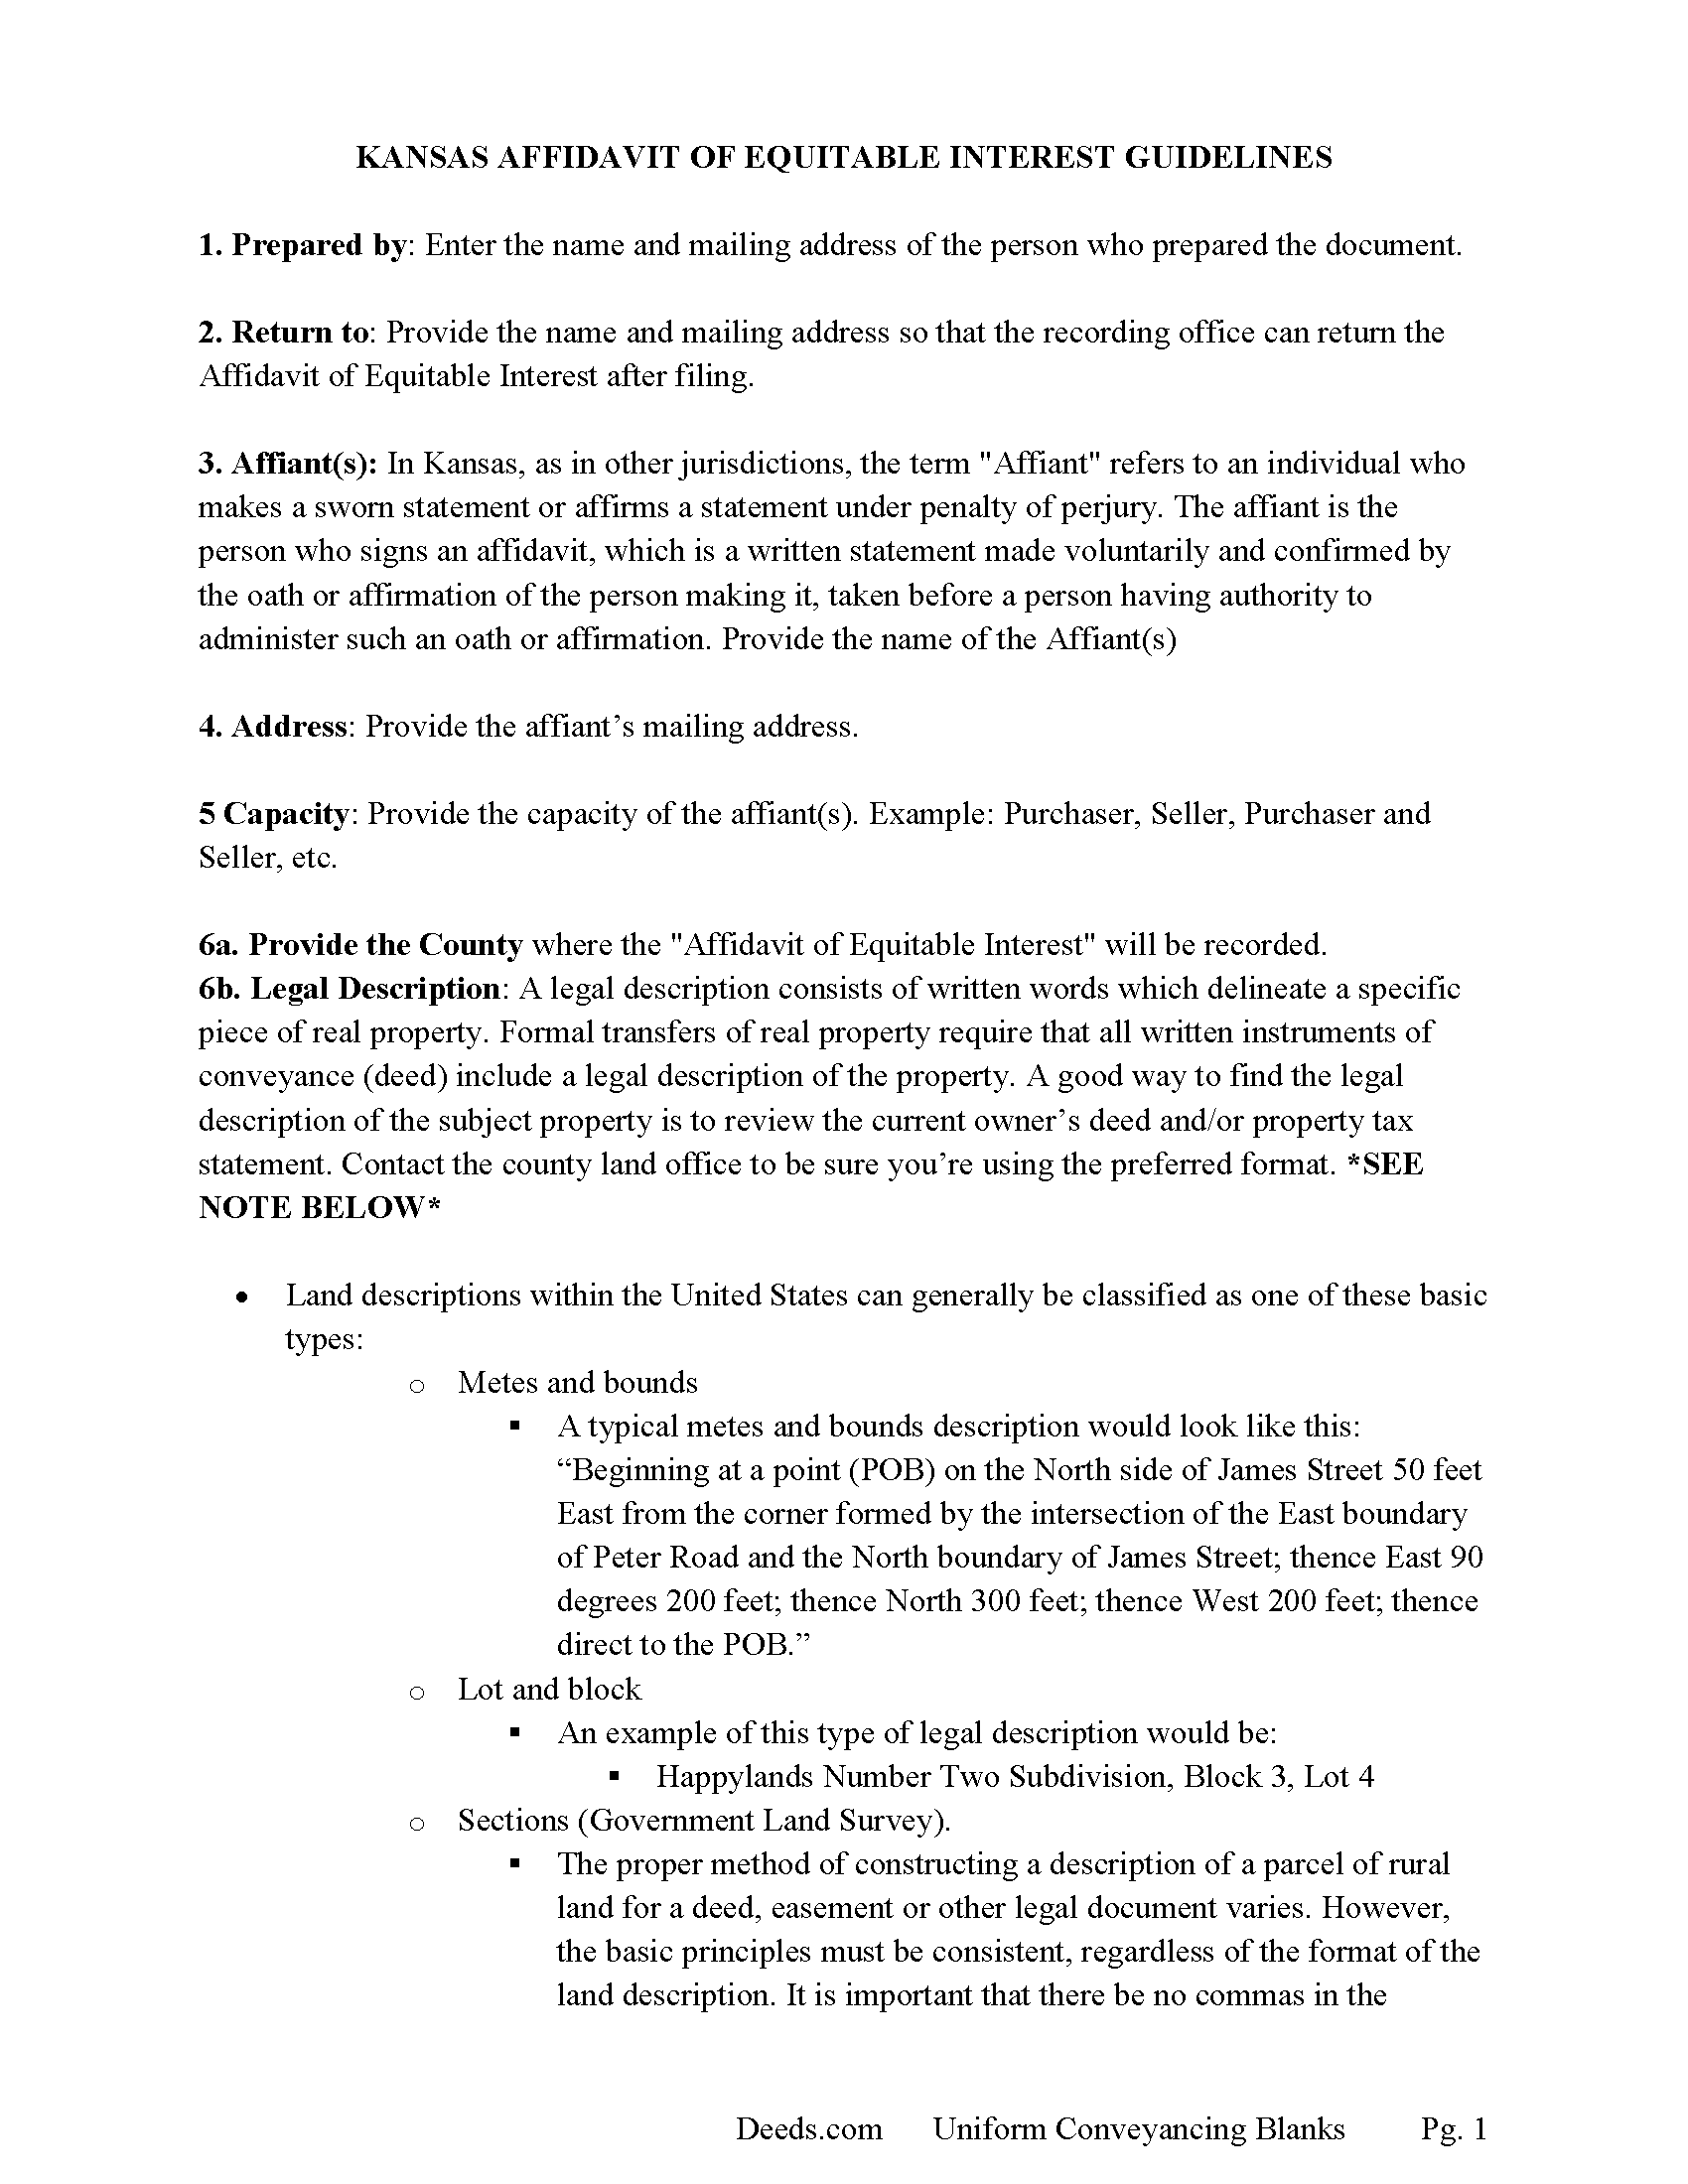 Seward County Affidavit for Equitable Interest Guide